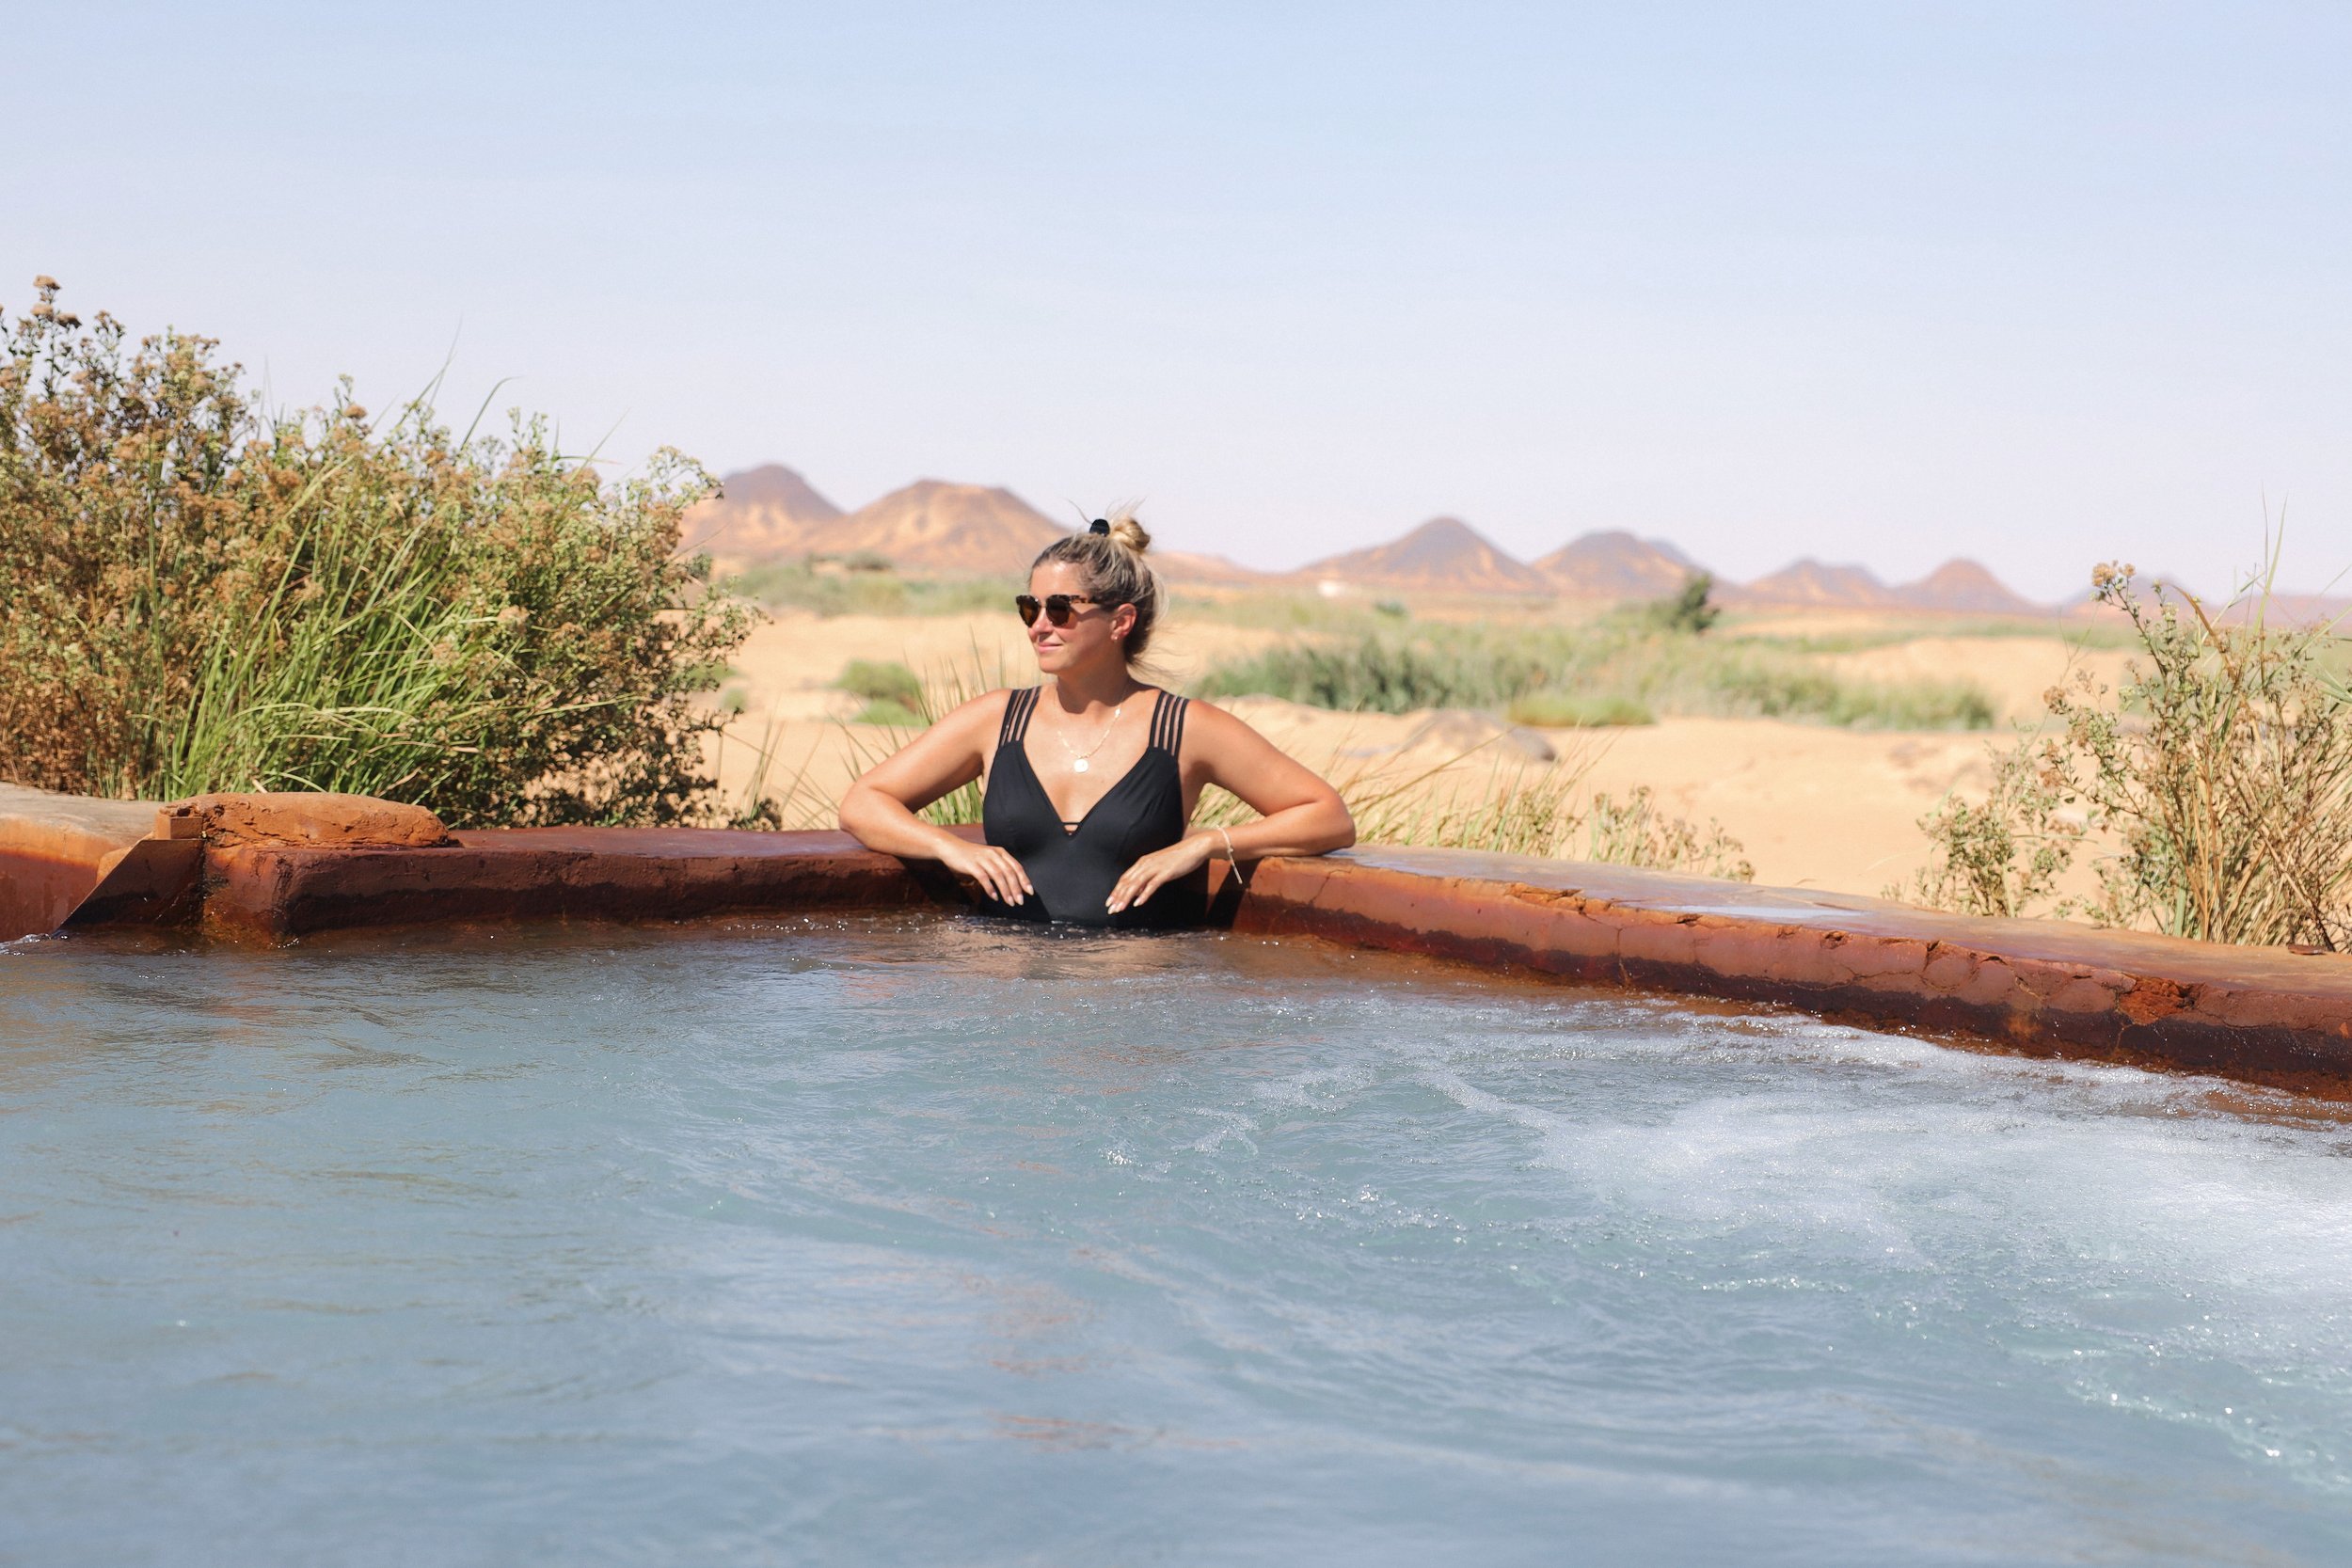 Relaxing at the hot springs - Western Desert of Egypt